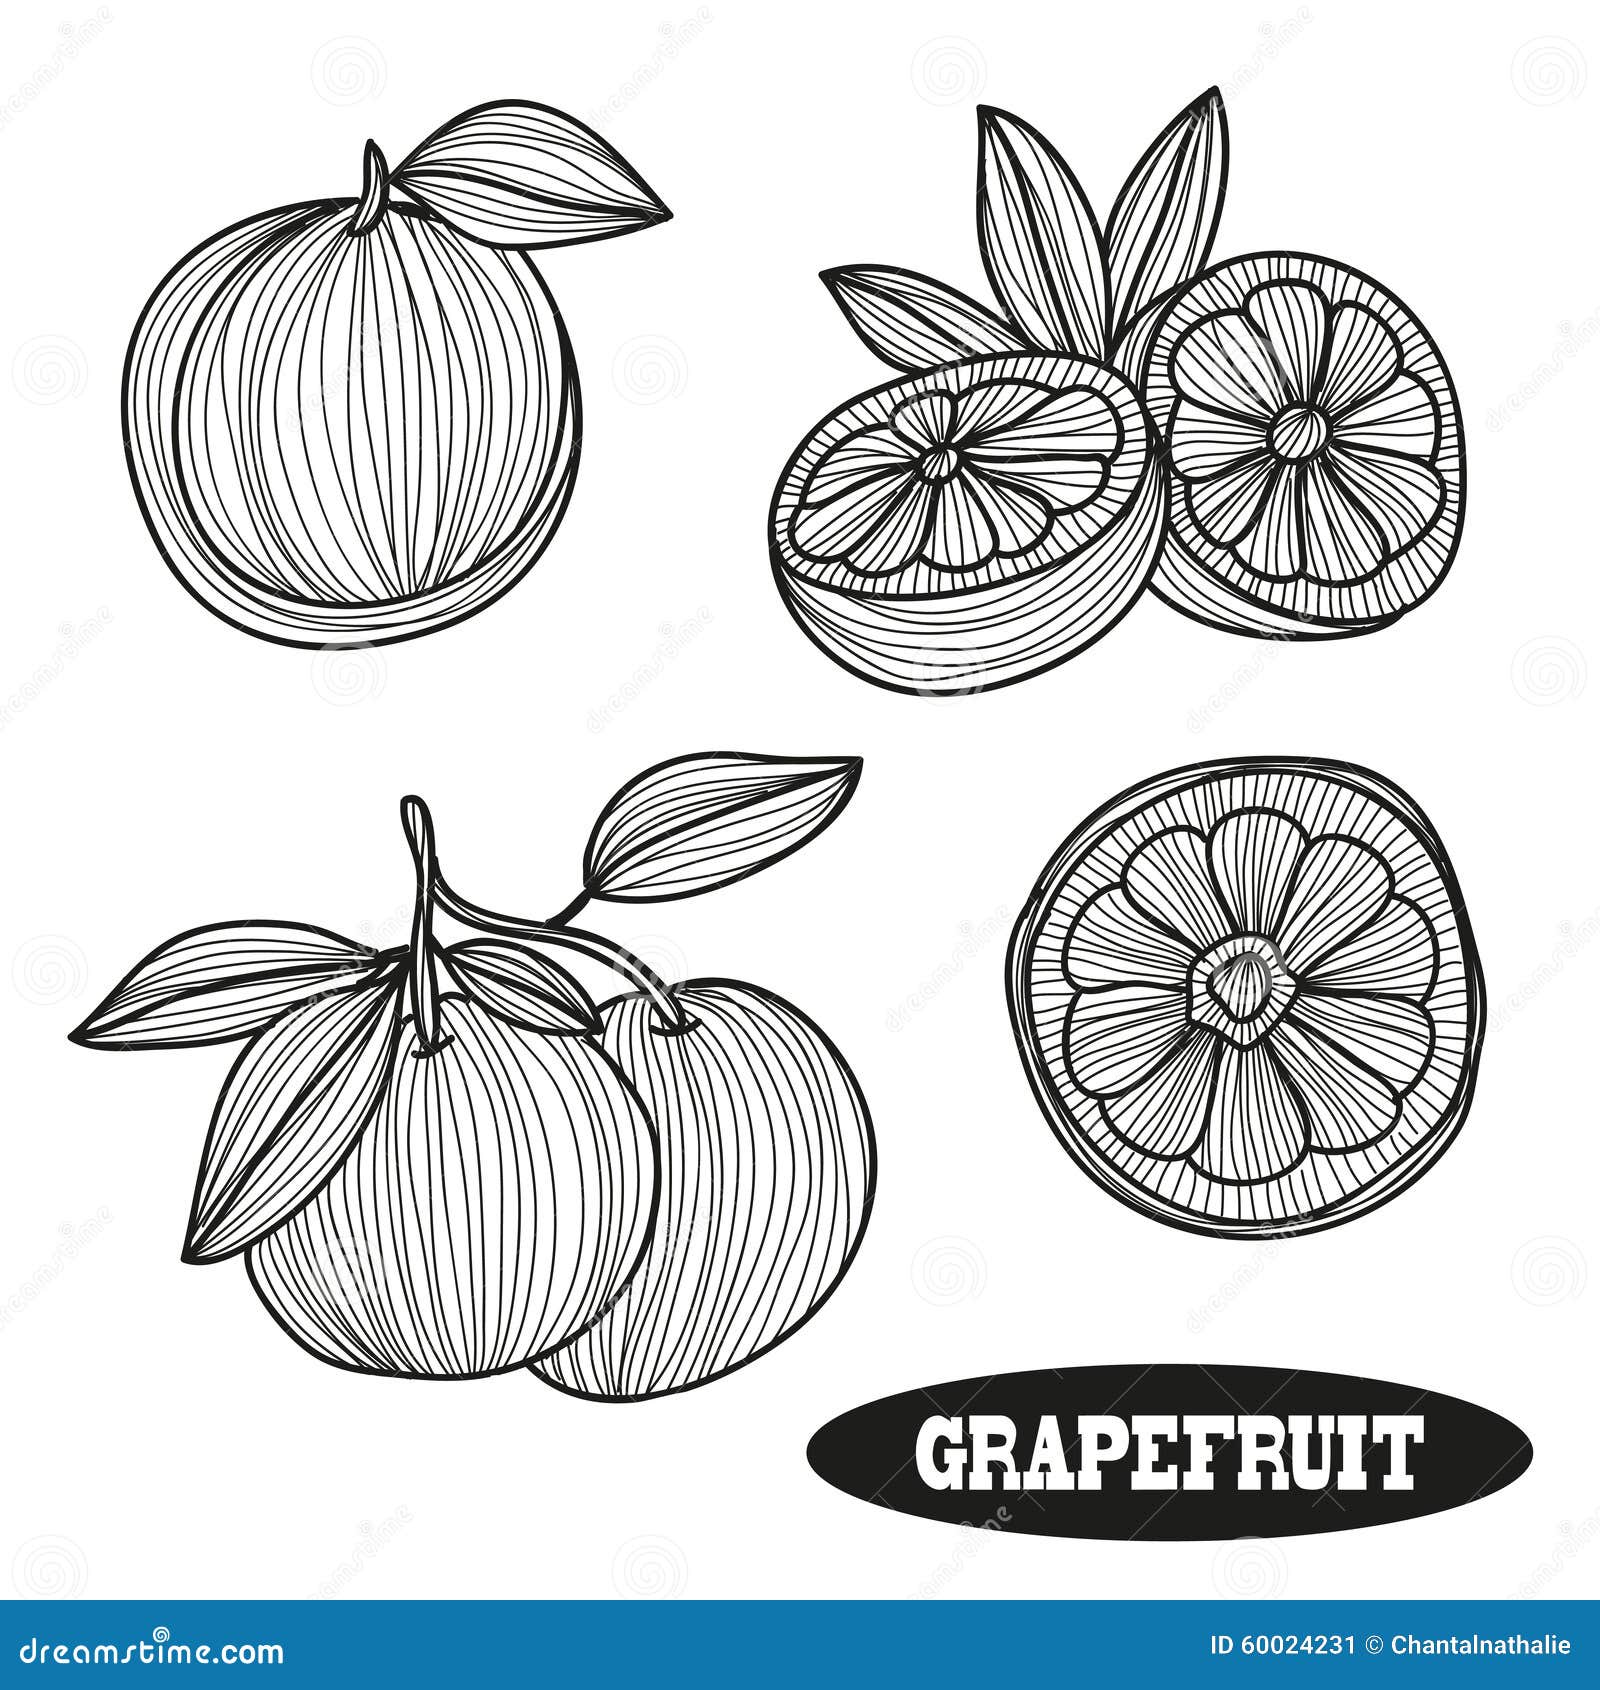 Hand drawn grapefruits stock vector. Illustration of grapefruit - 60024231